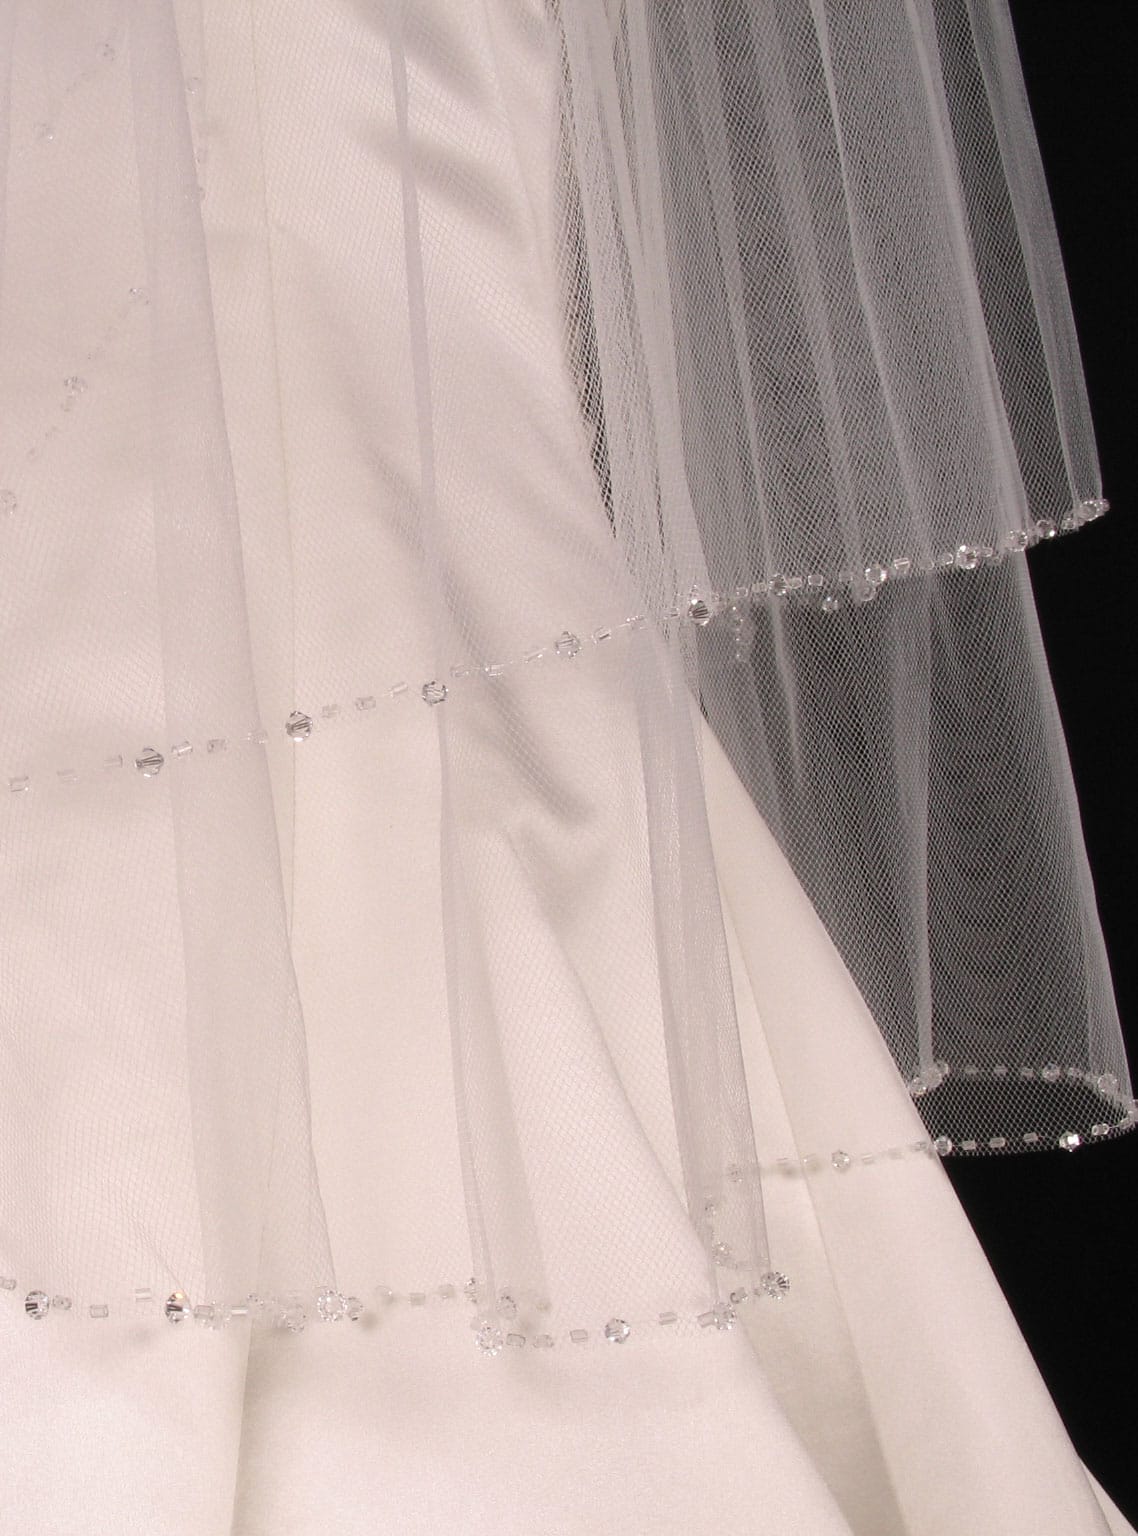 Your Dream Dress S2622VL Diamond White Waist Length Bridal Veil